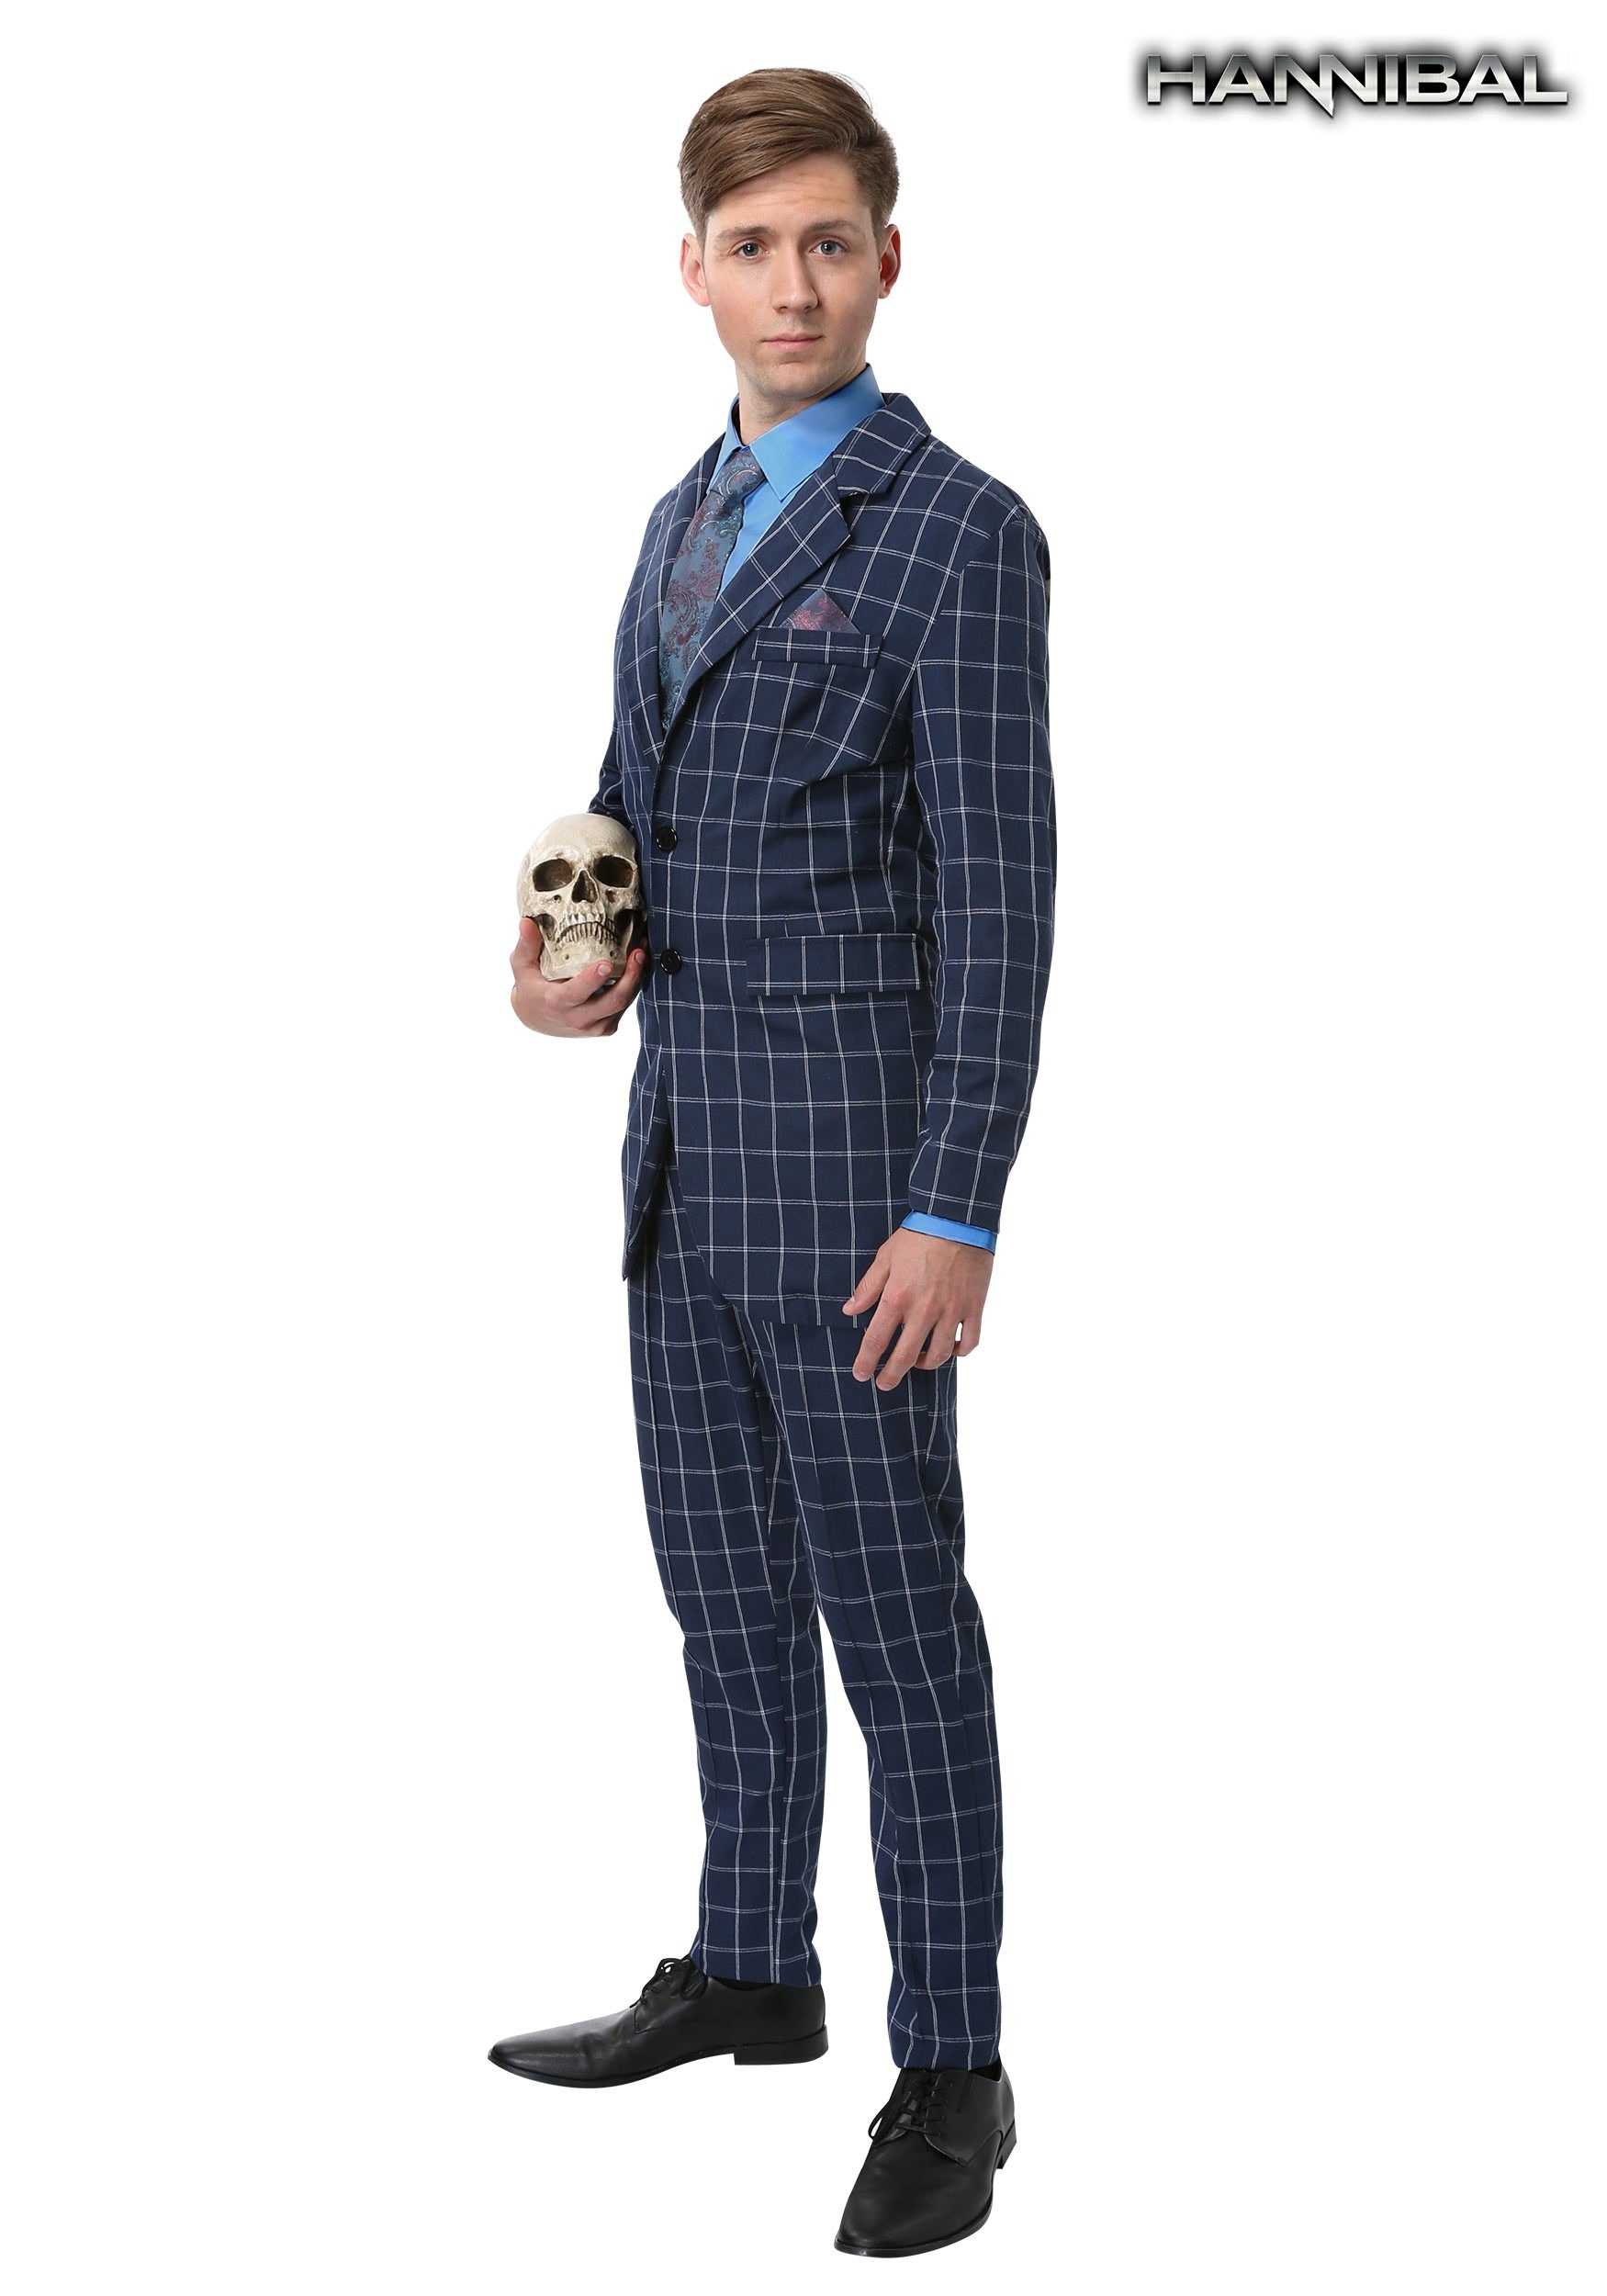 Hannibal Lecter Costume Suit